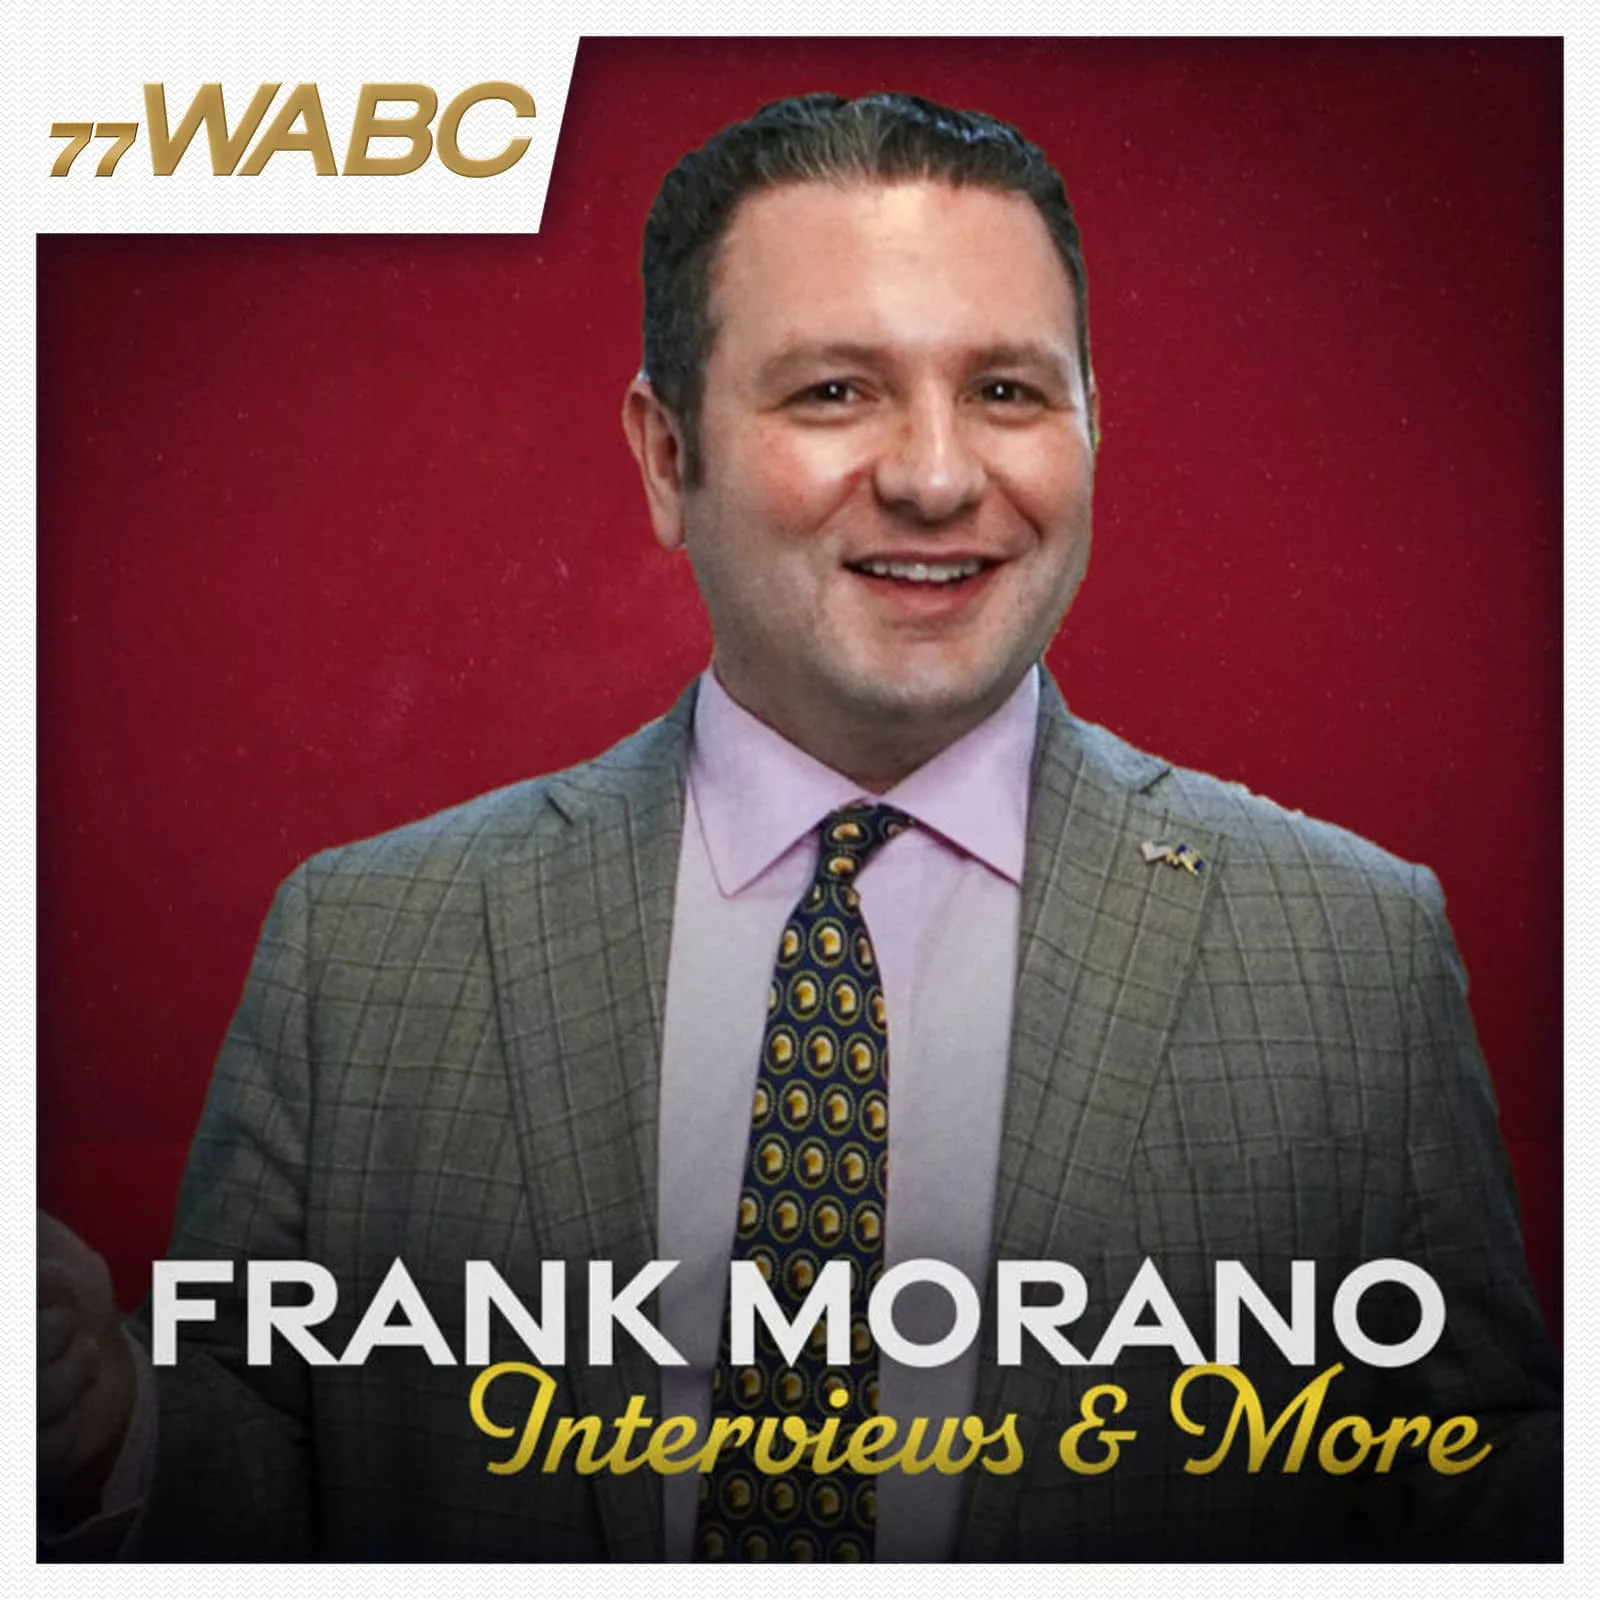 frank-morano-interviews-and-more-podcast-new-logo6979